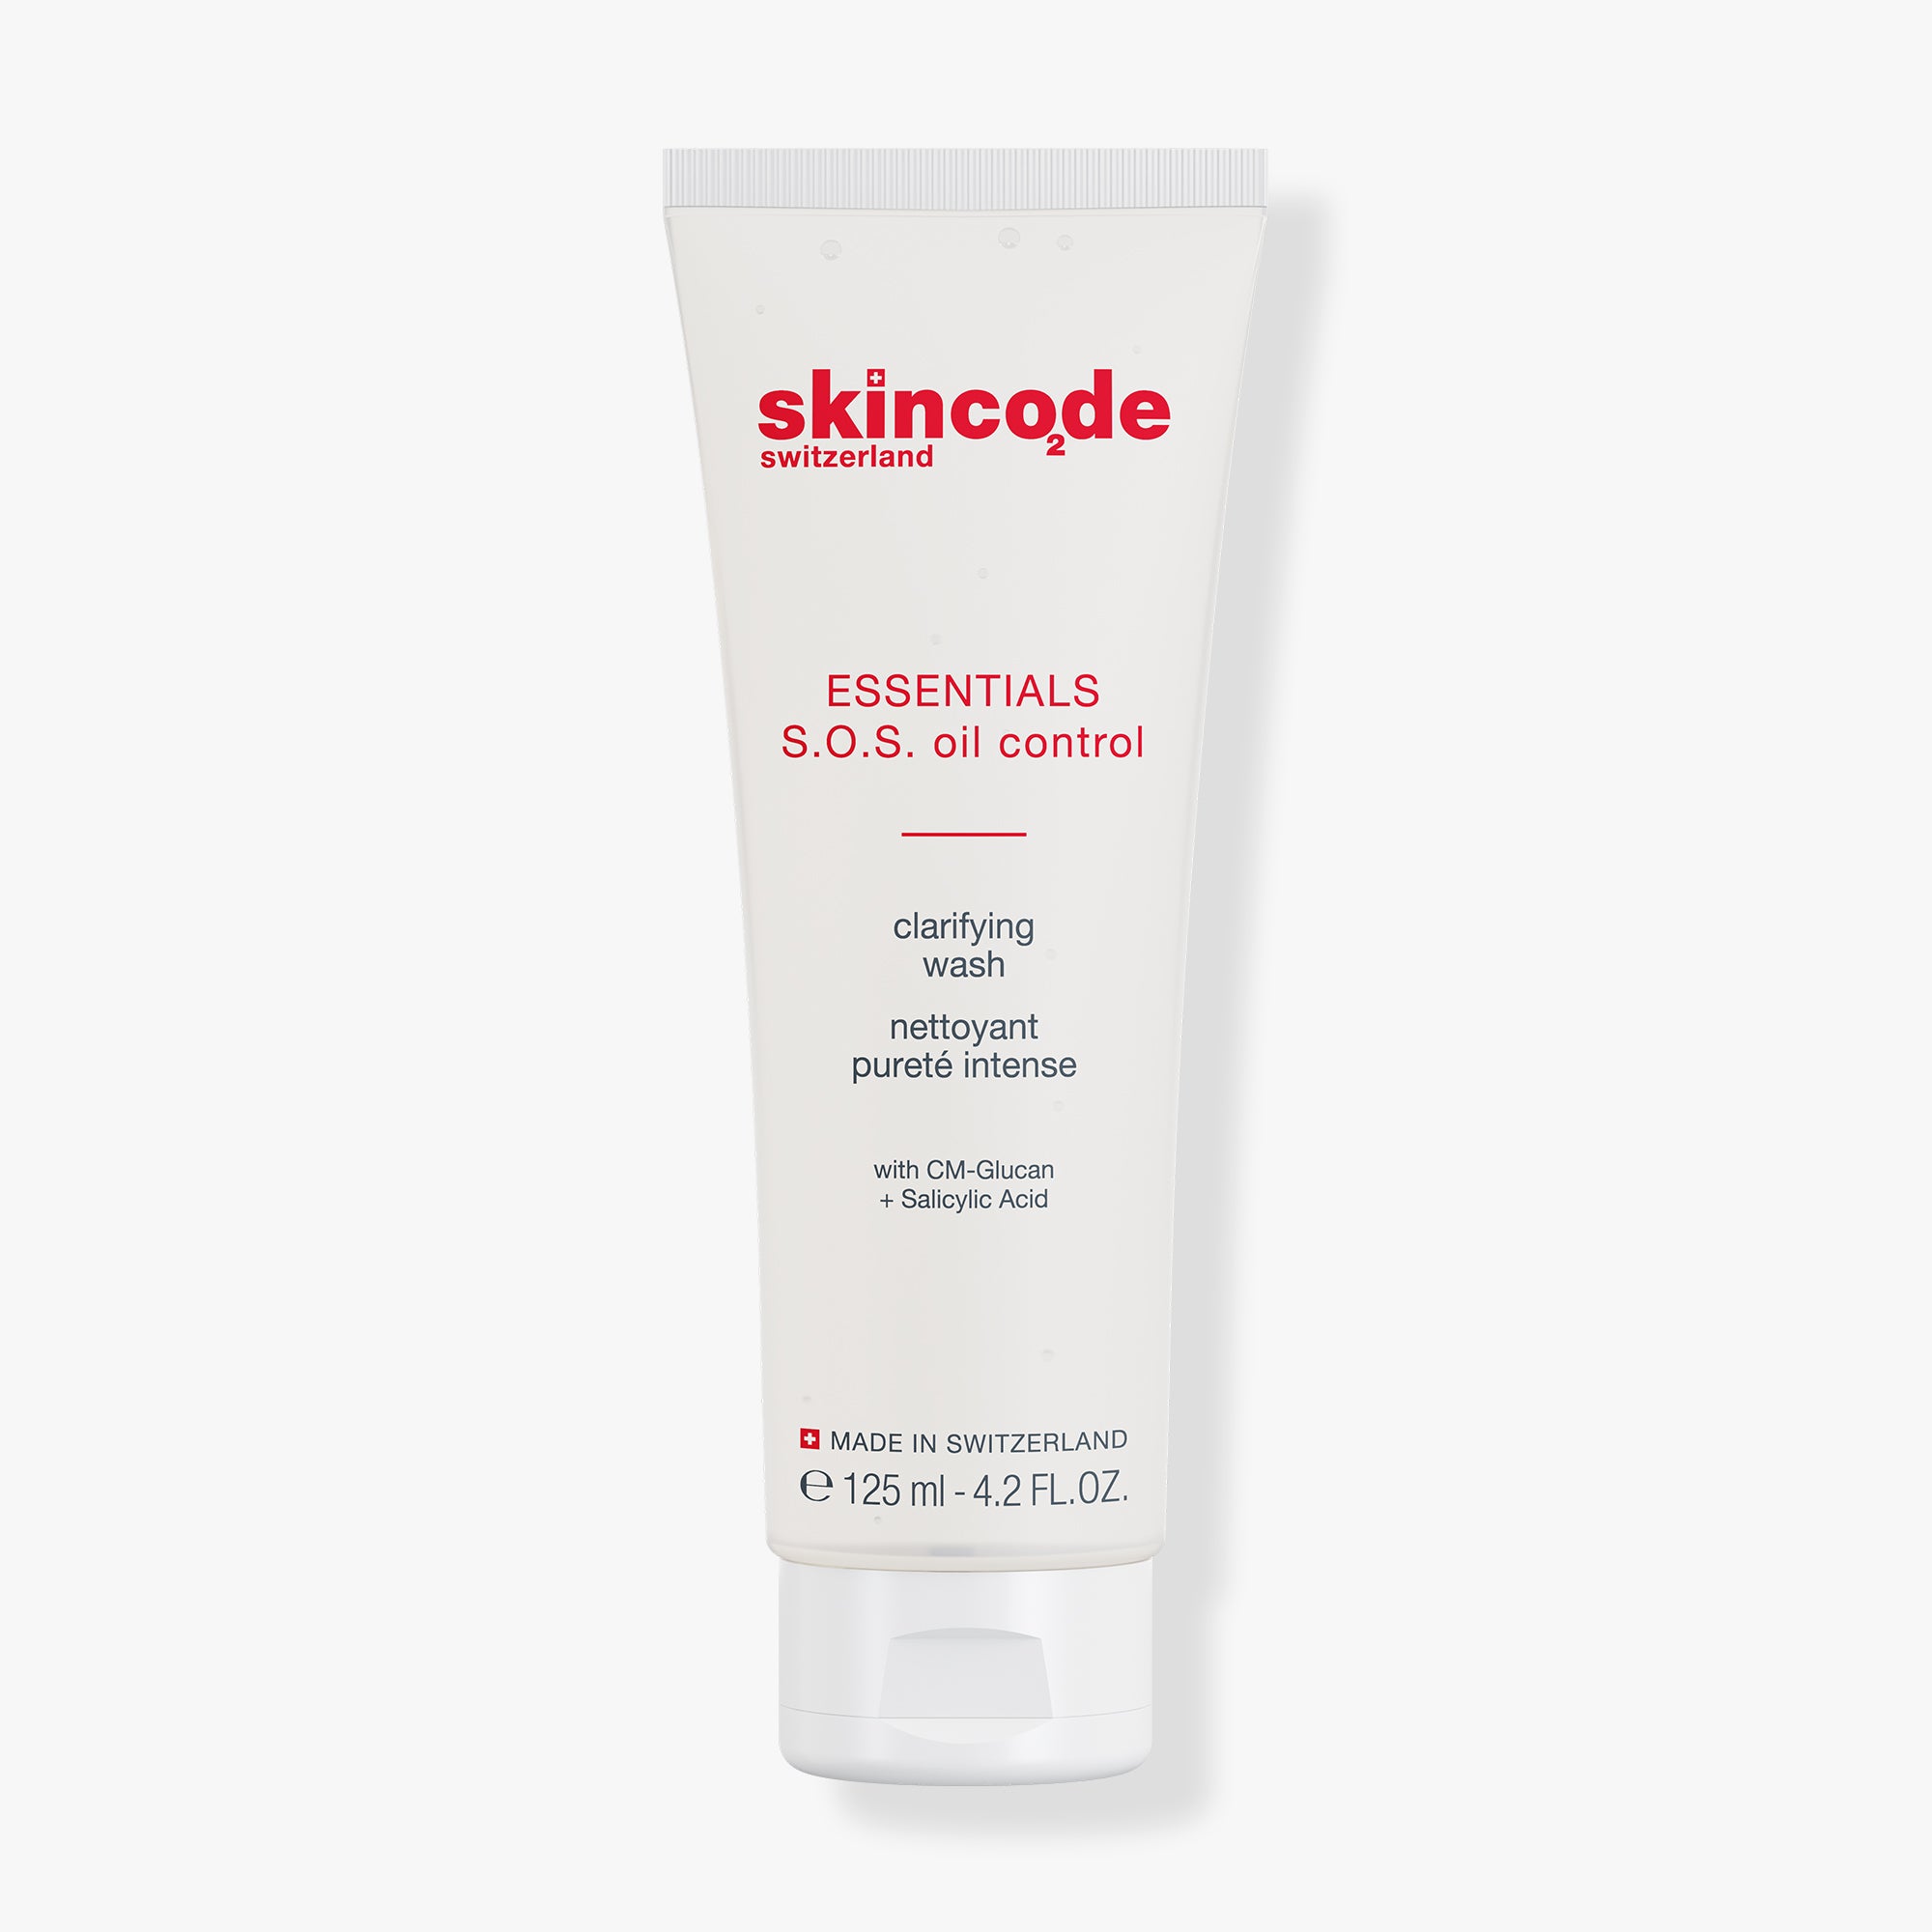 SkinCode Essentials Oil Control, Clarifying Wash